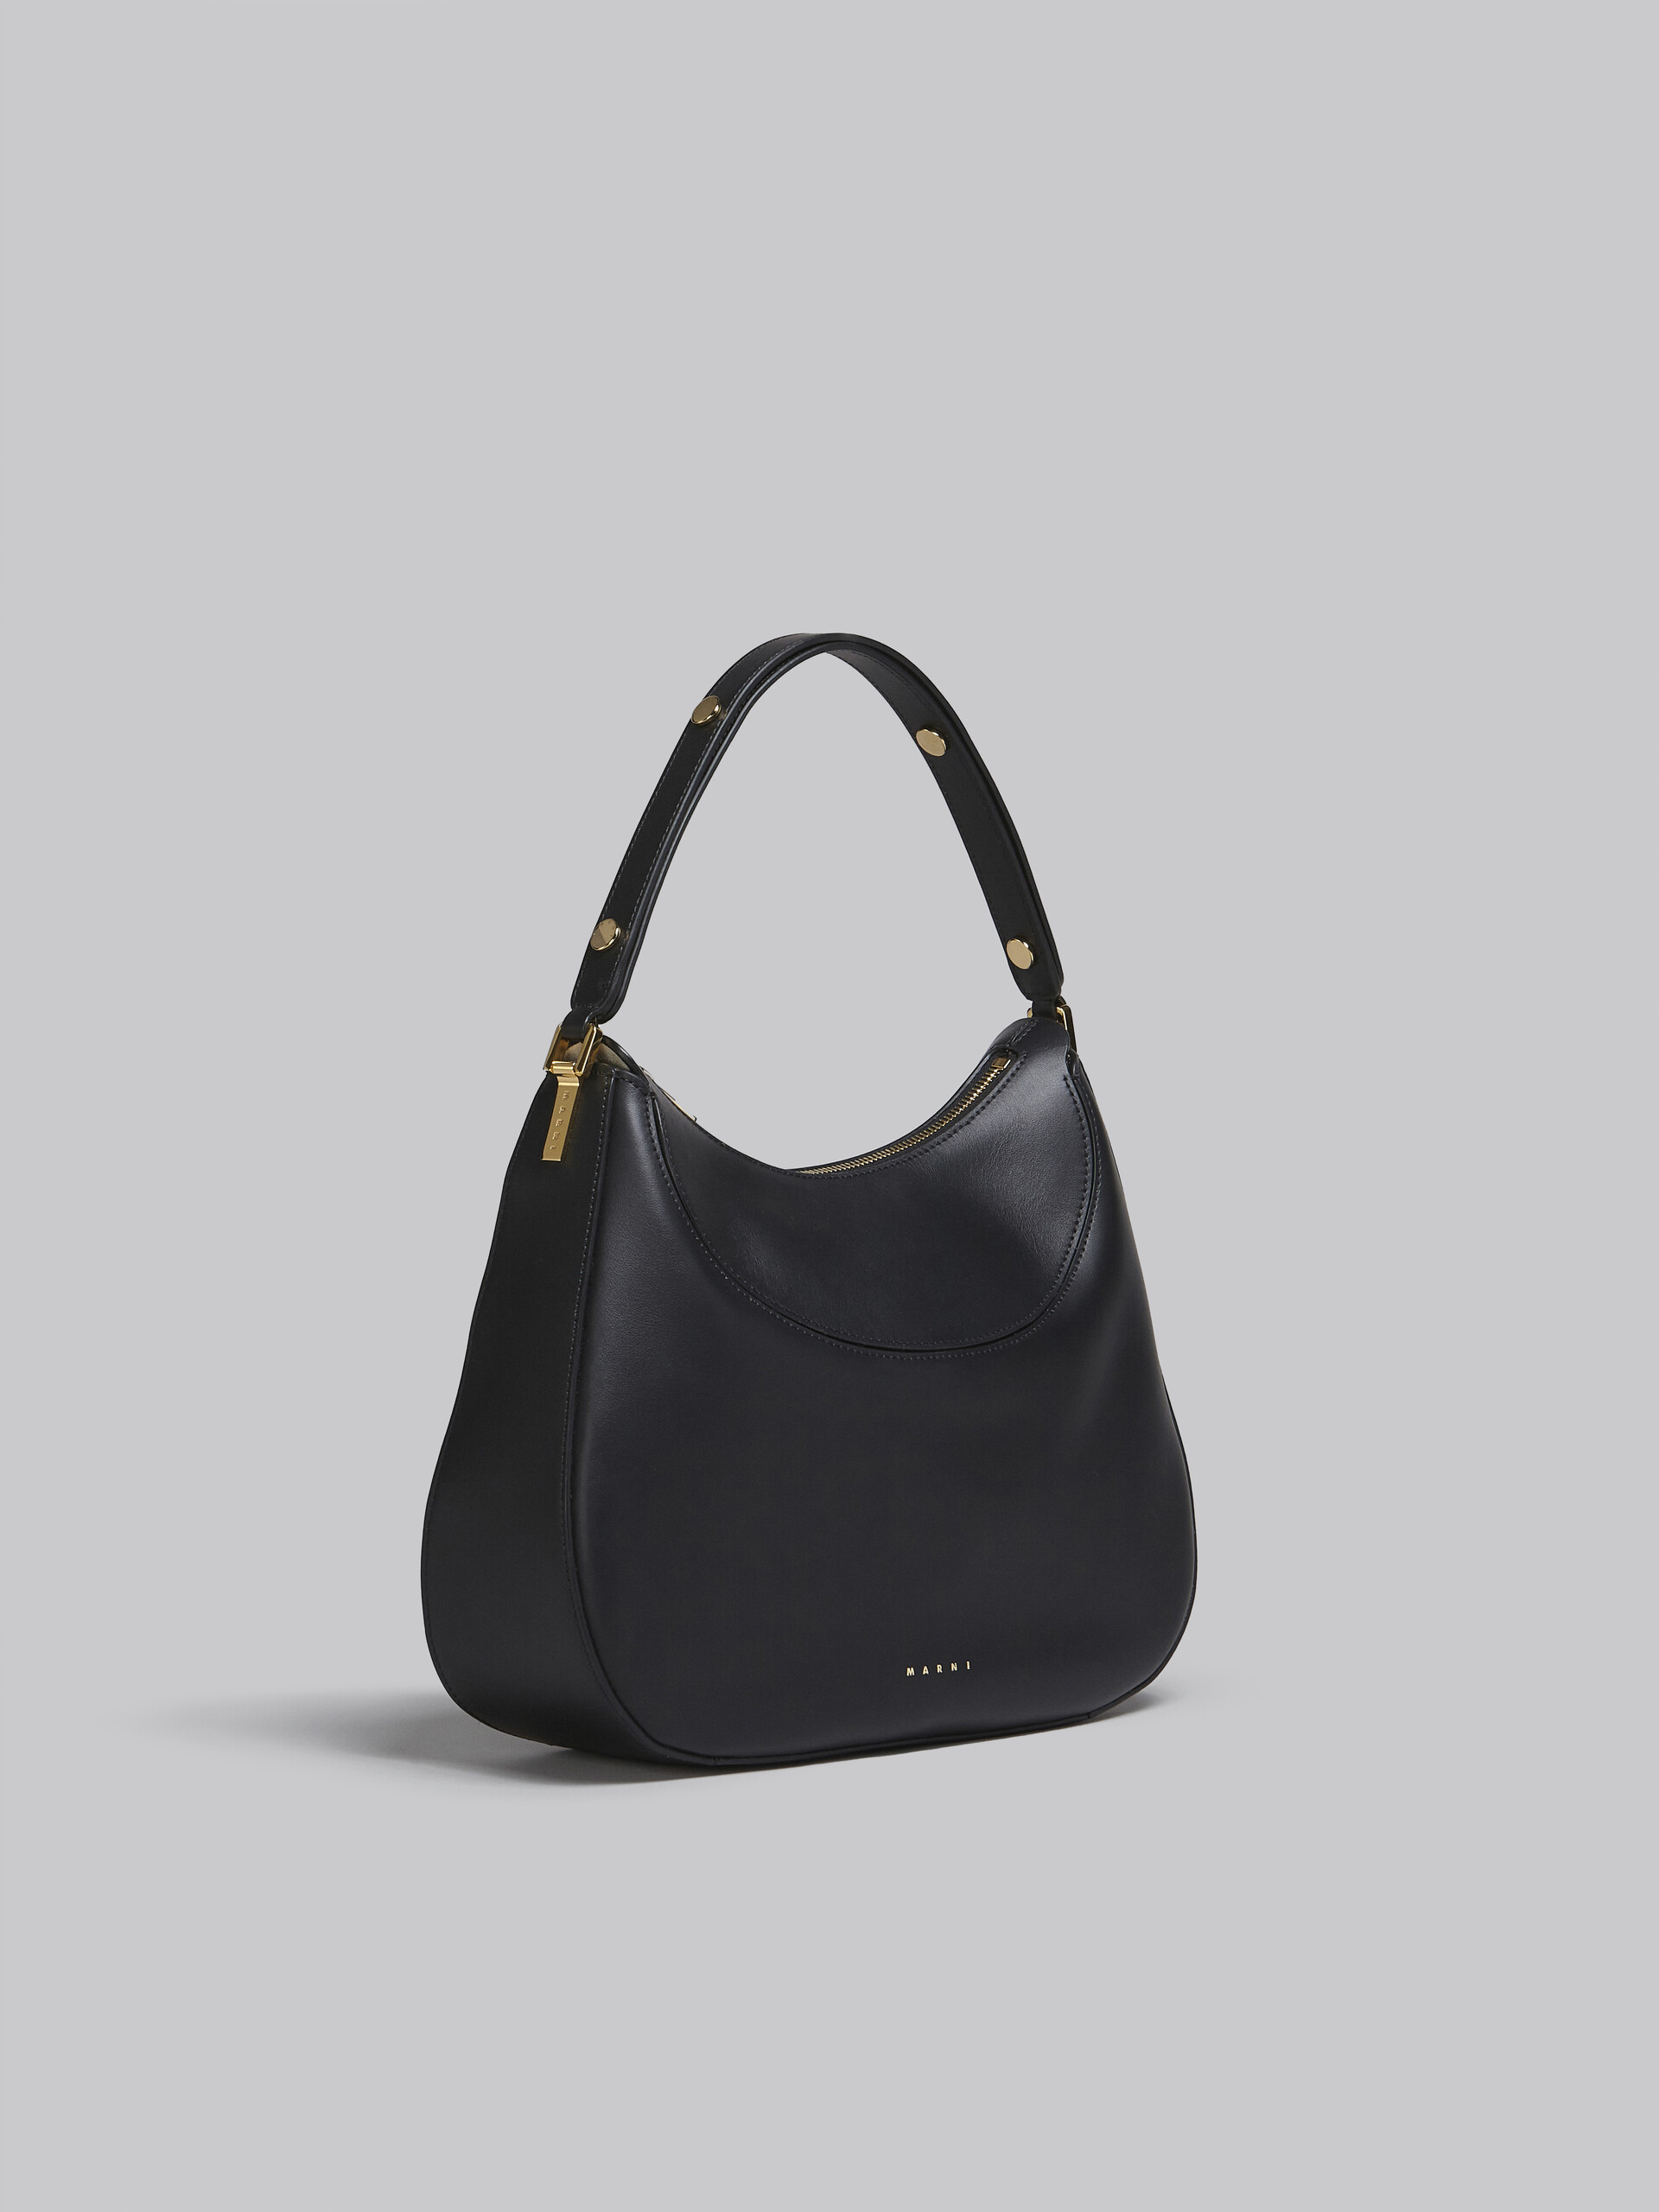 Milano large bag in black leather - Handbag - Image 6